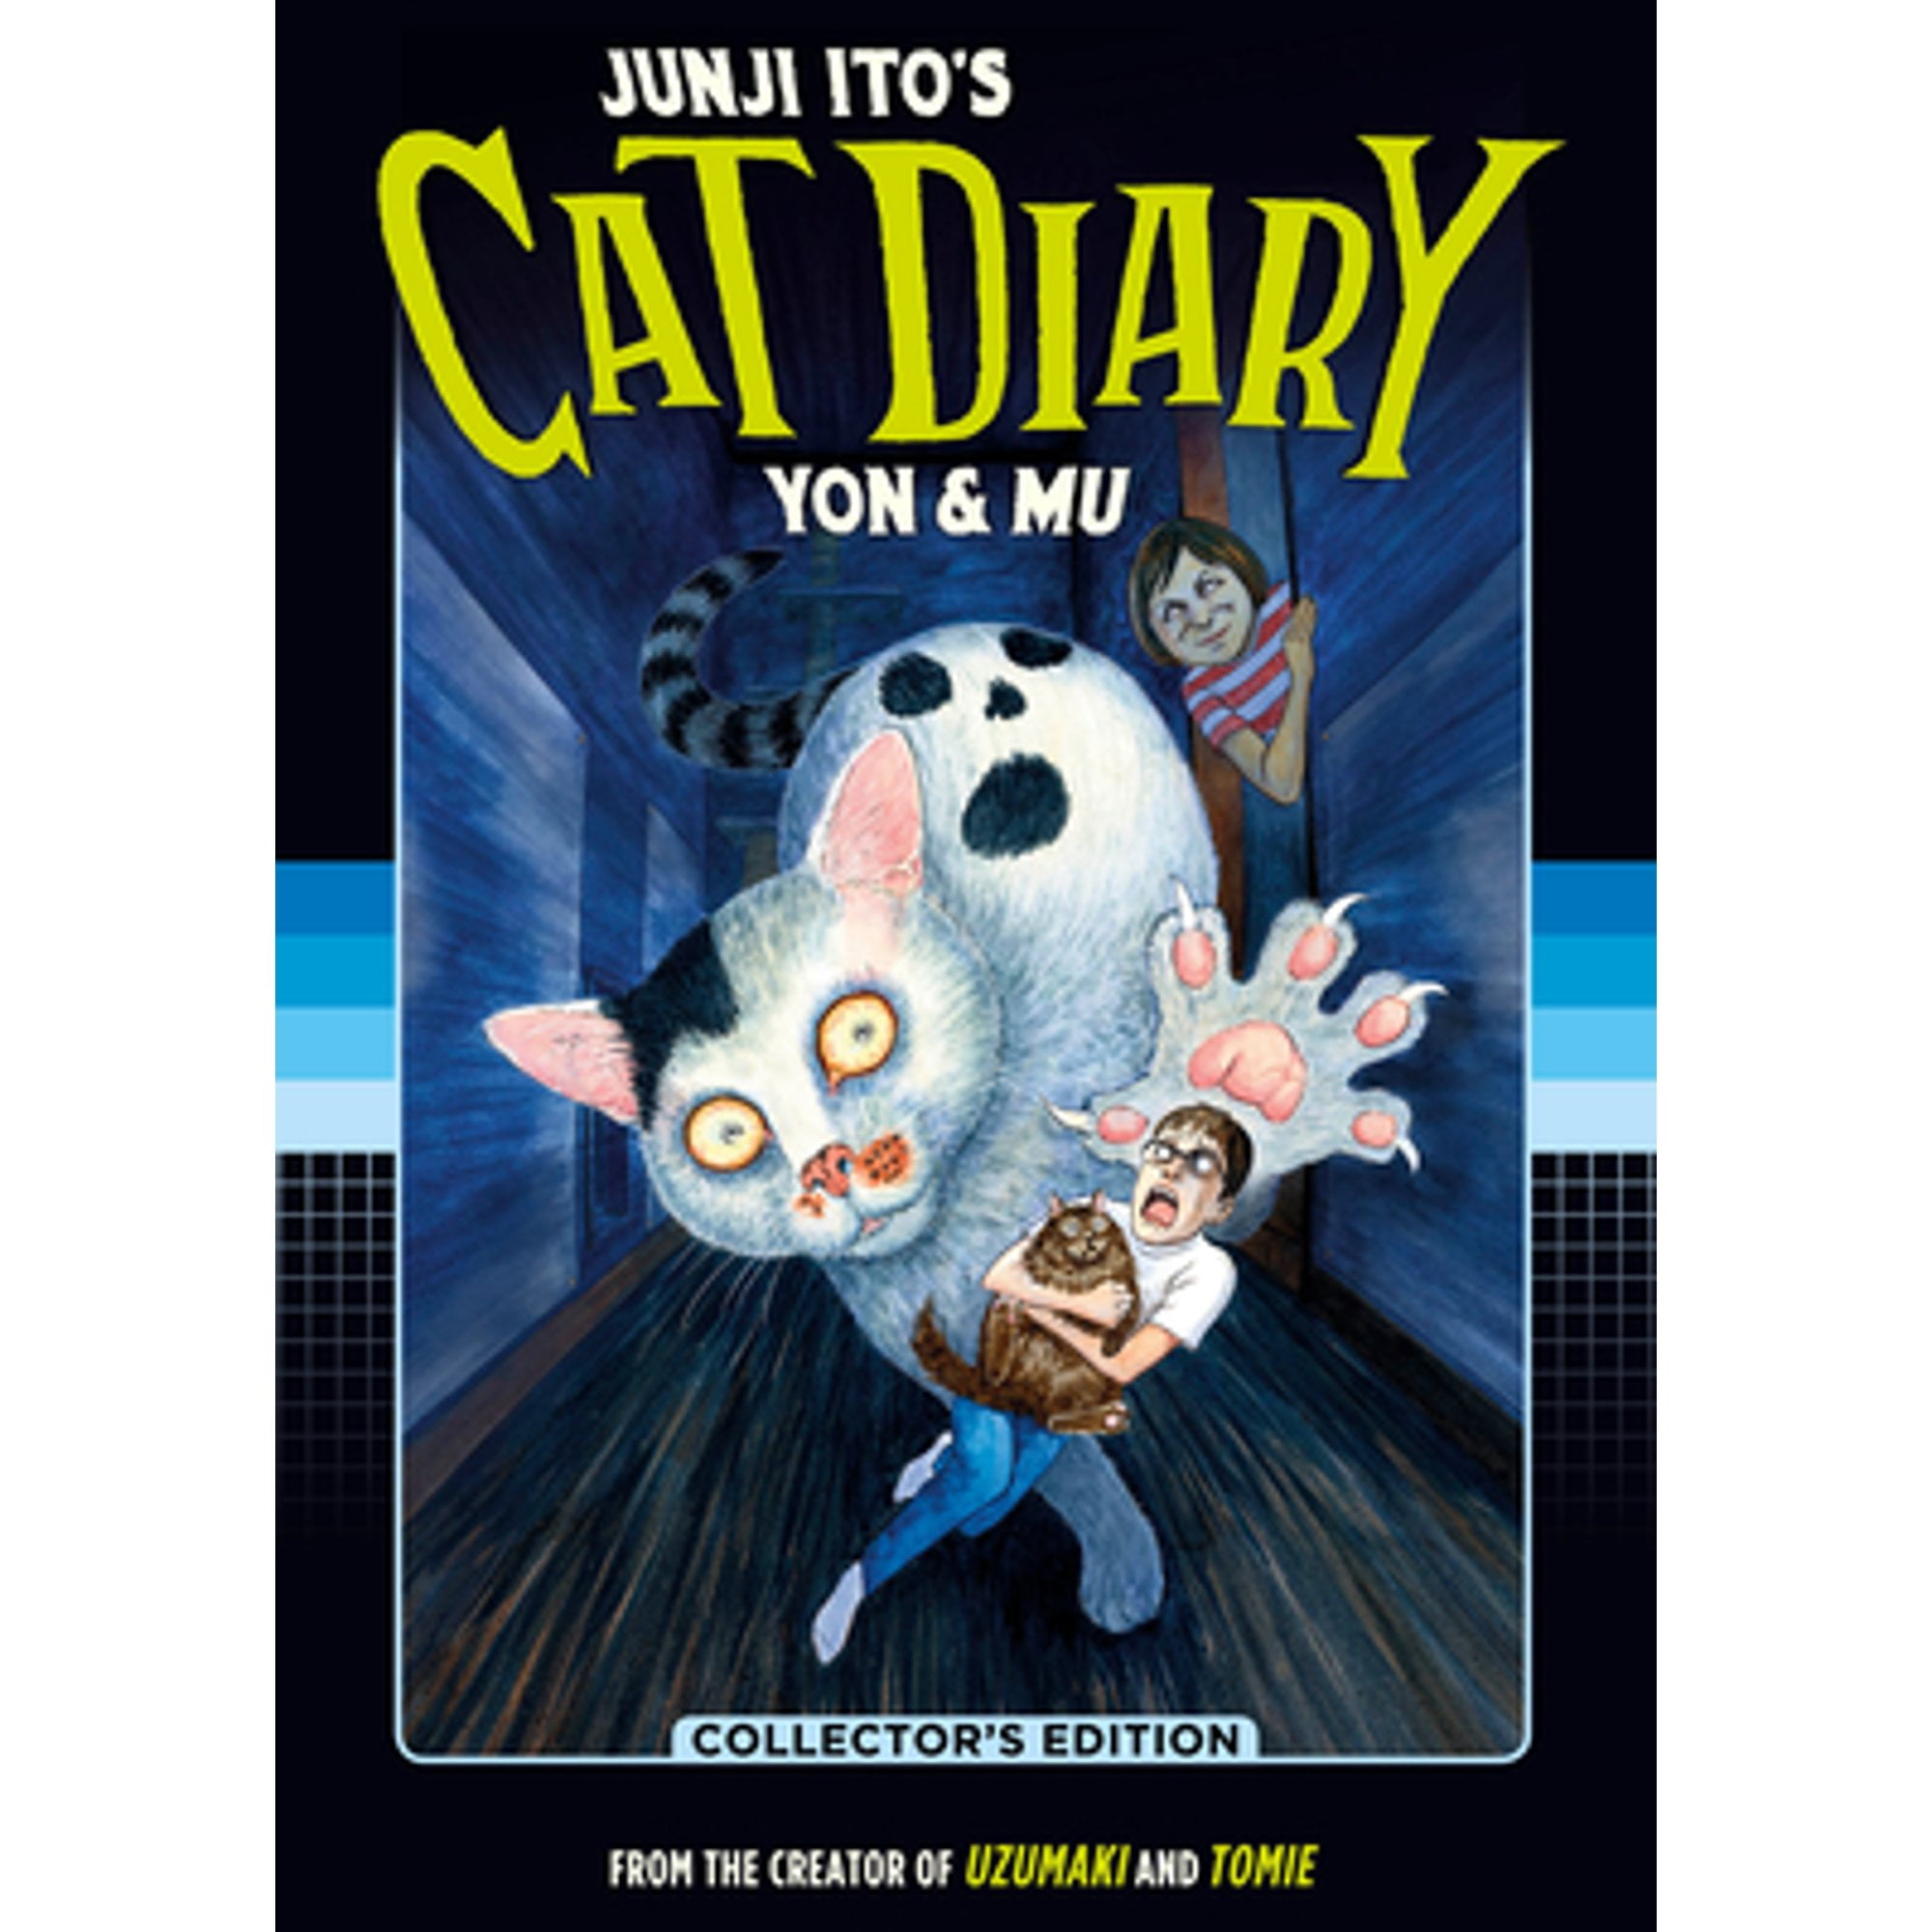 Pre-Owned Junji Ito's Cat Diary: Yon & Mu Collector's Edition (Hardcover 9781646512515) by Junji Ito